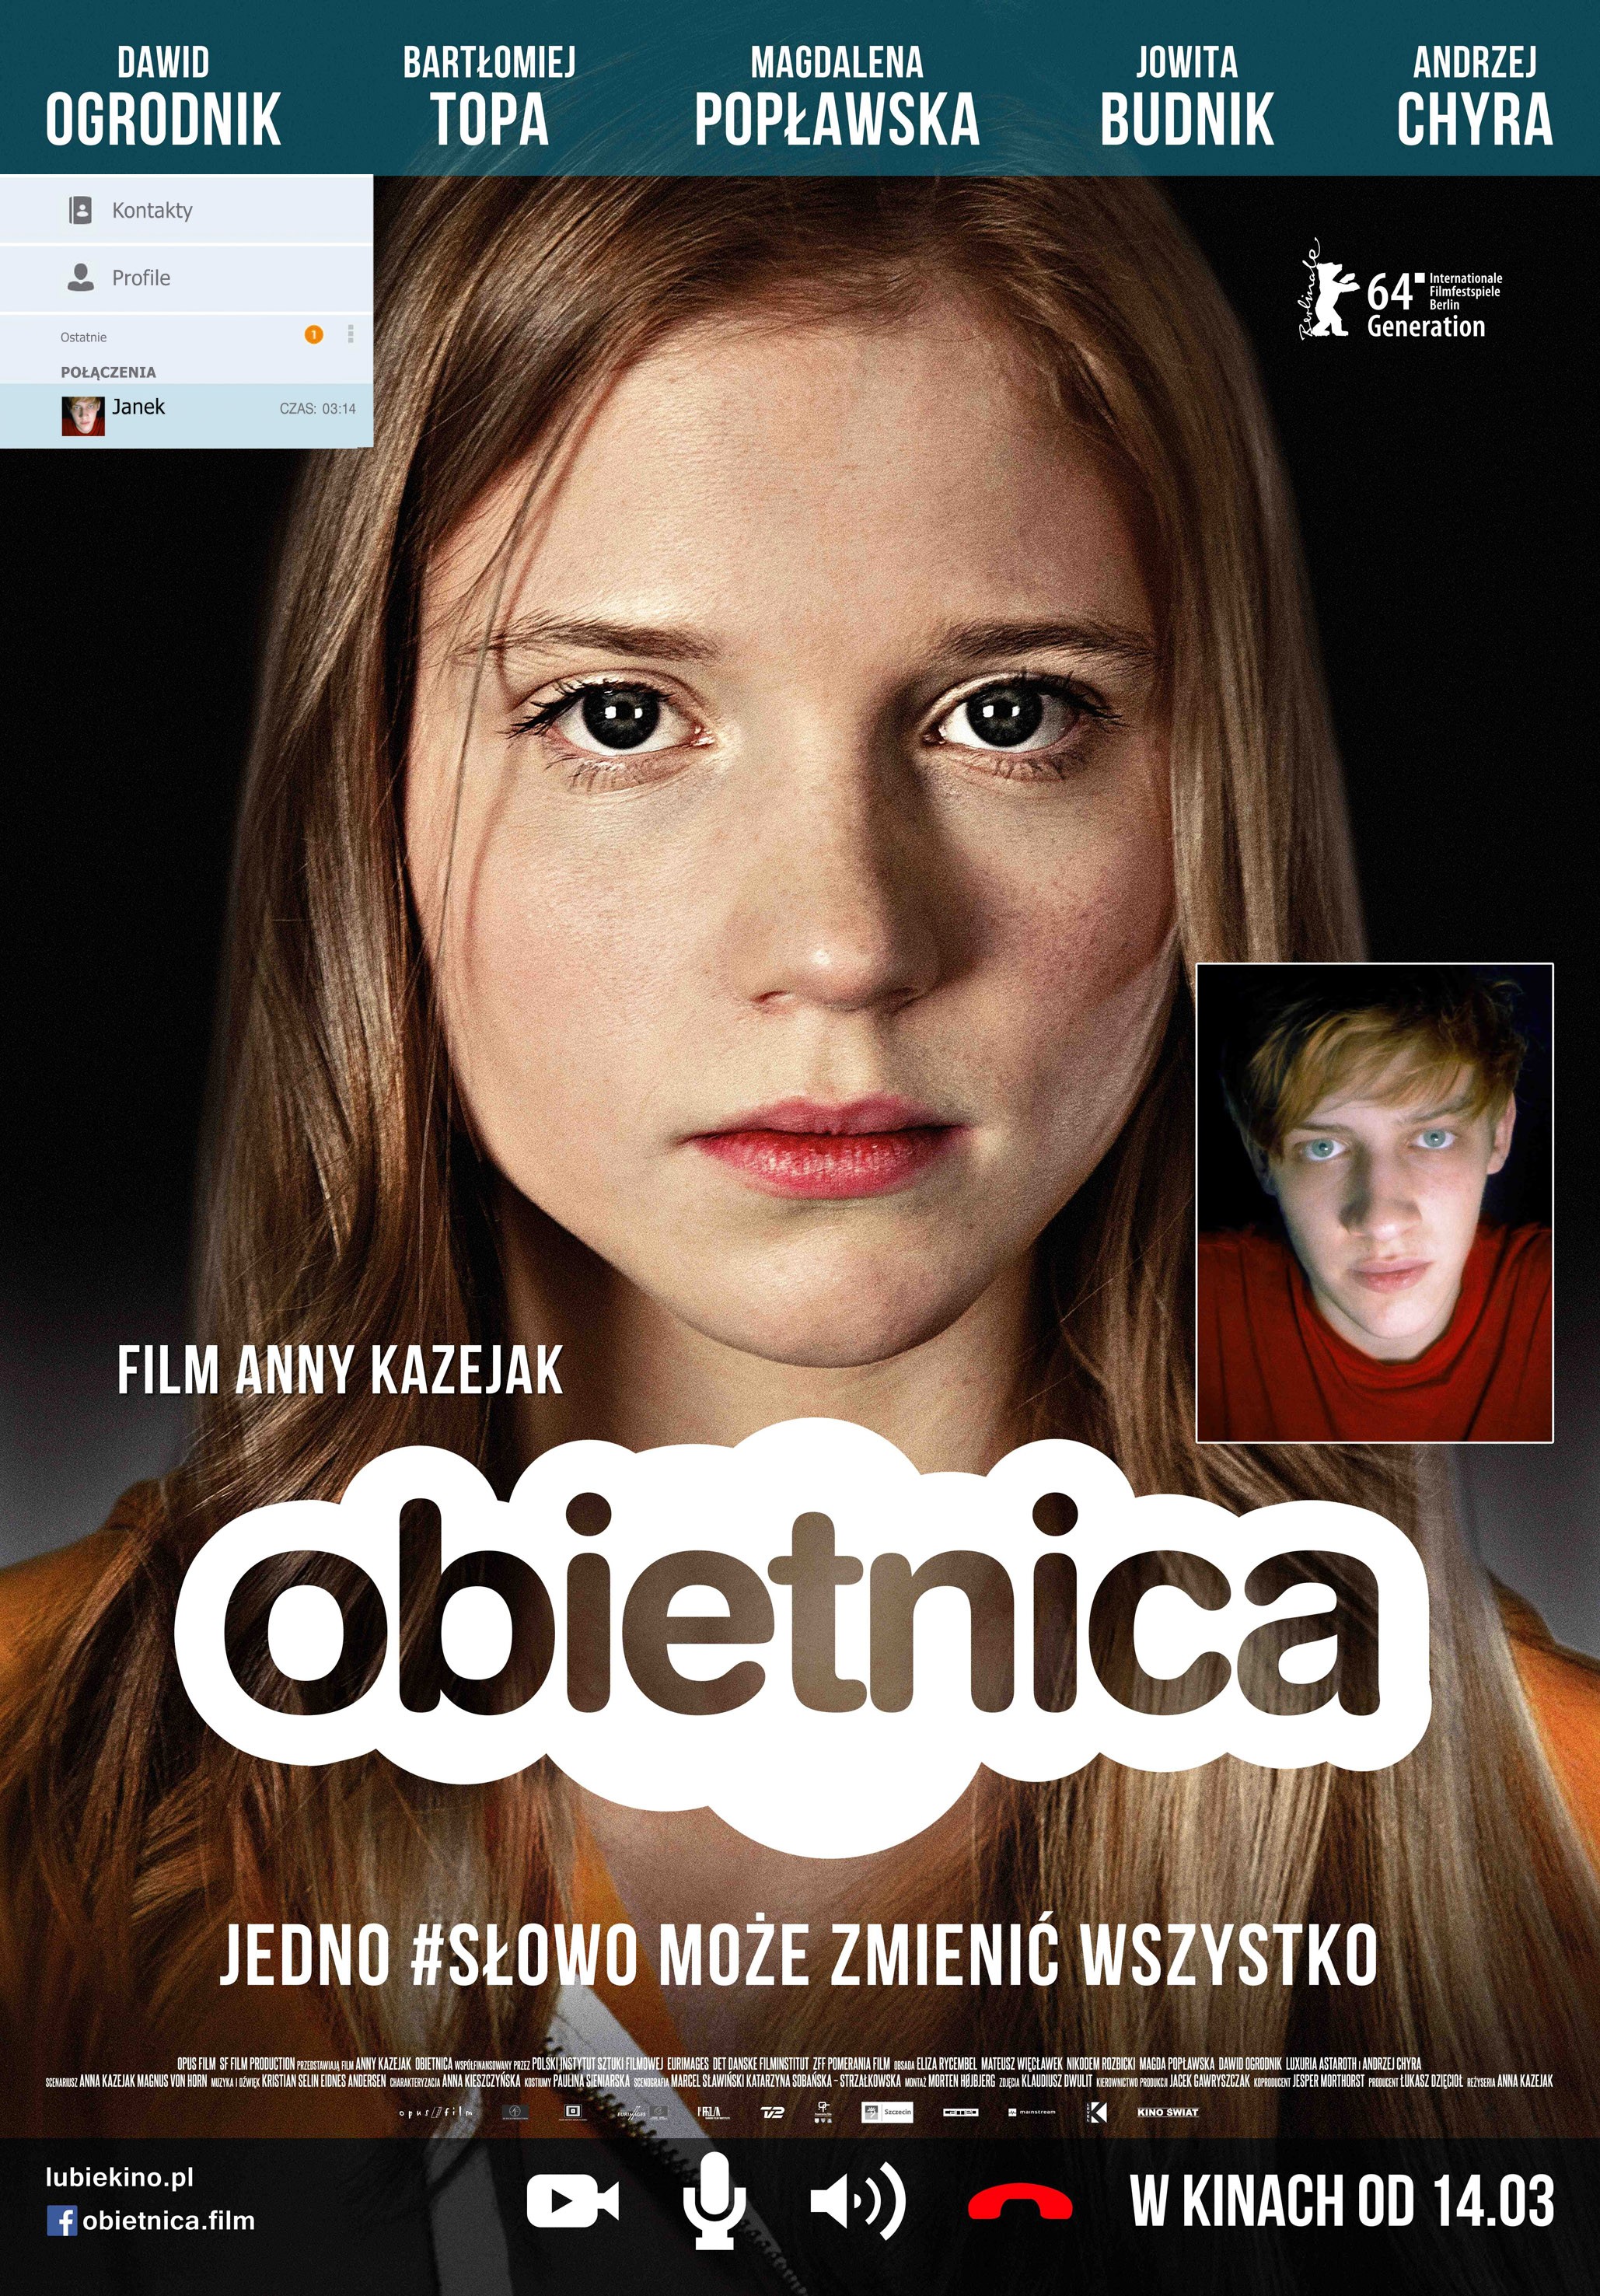 Mega Sized Movie Poster Image for Obietnica (#2 of 2)